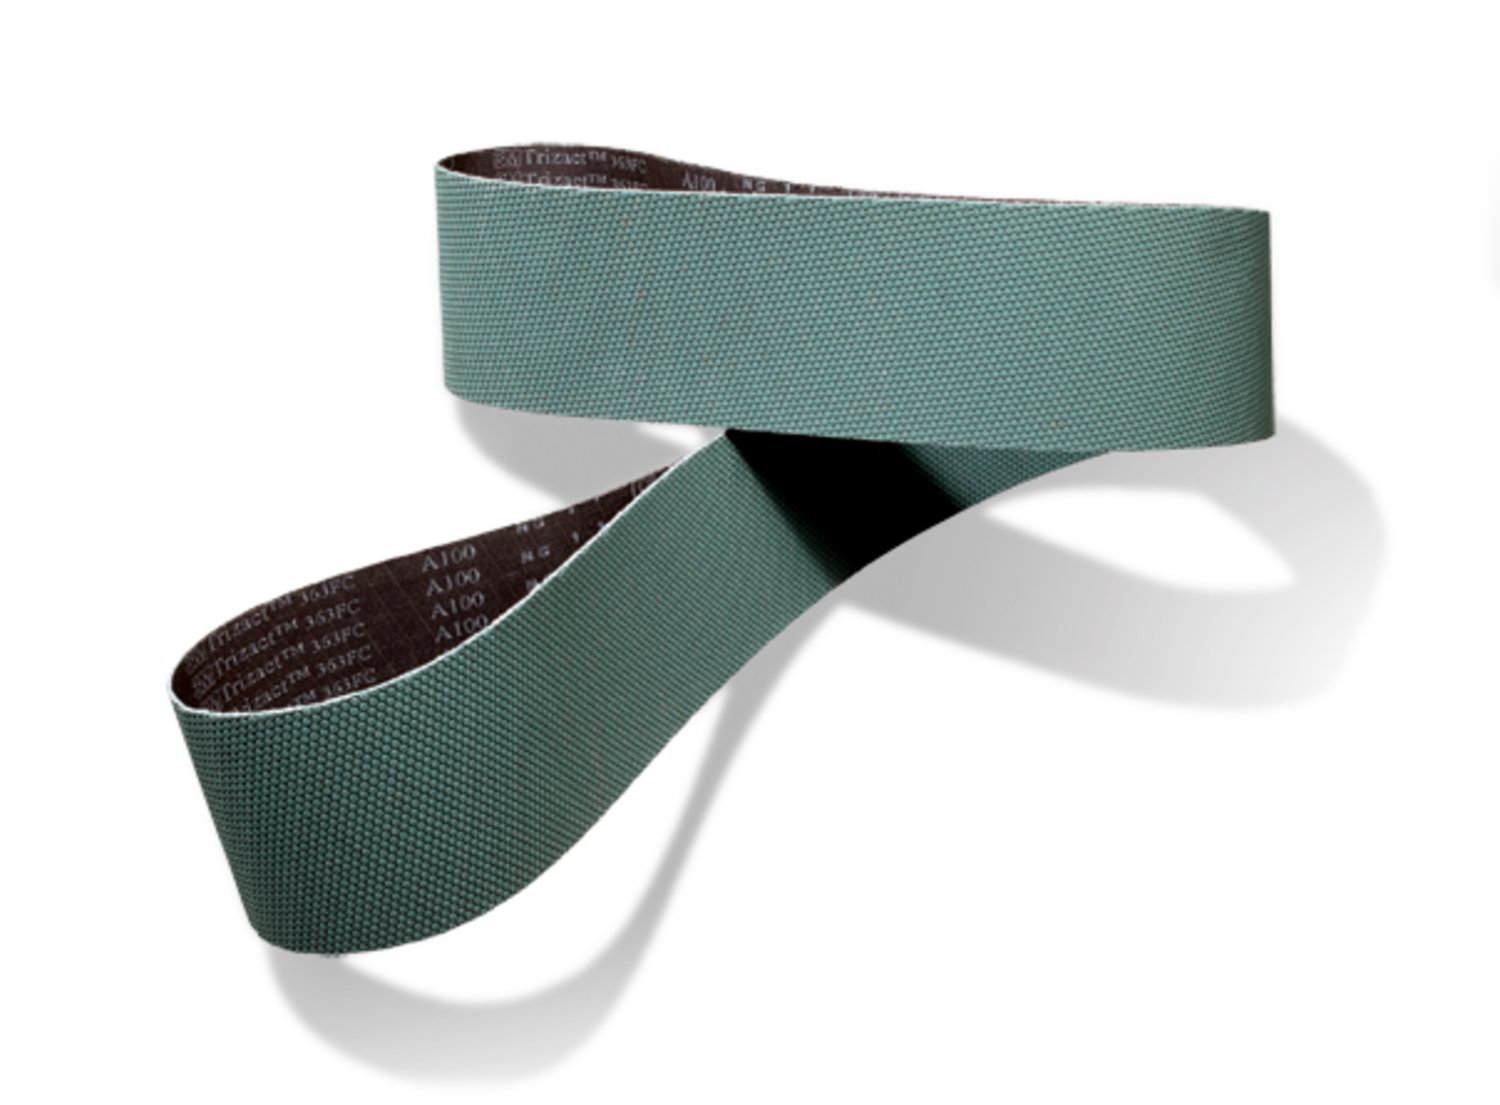 7010514951 - 3M Trizact Cloth Belt 363FC, A65 YF-weight, 8 in x 60 in, Film-lok,
Full-flex